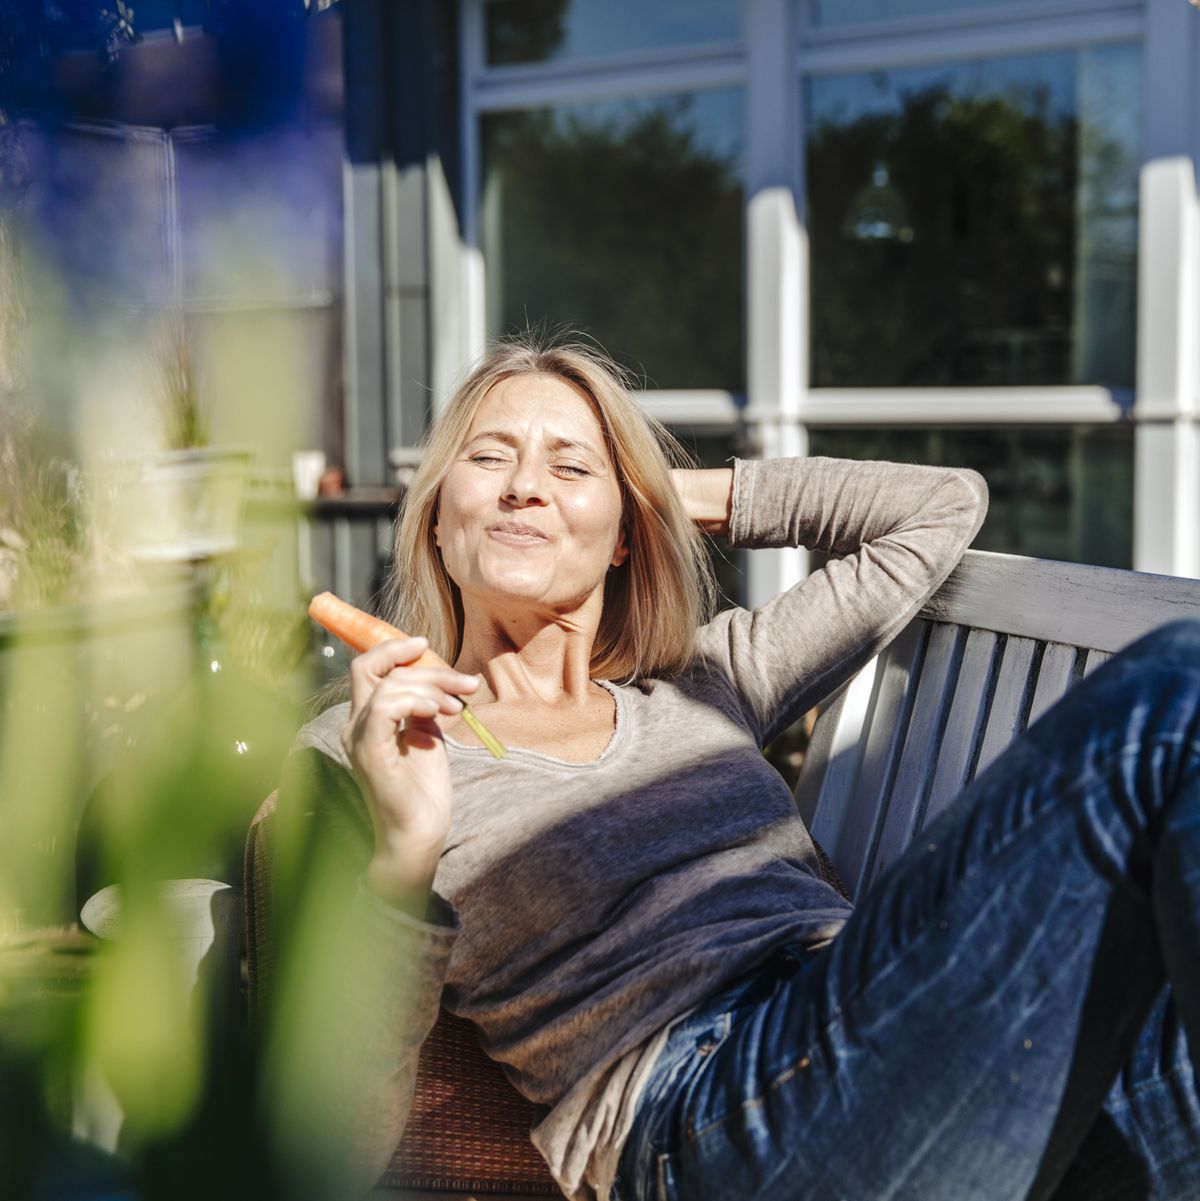 woman relaxing on garden bench eating a carrot